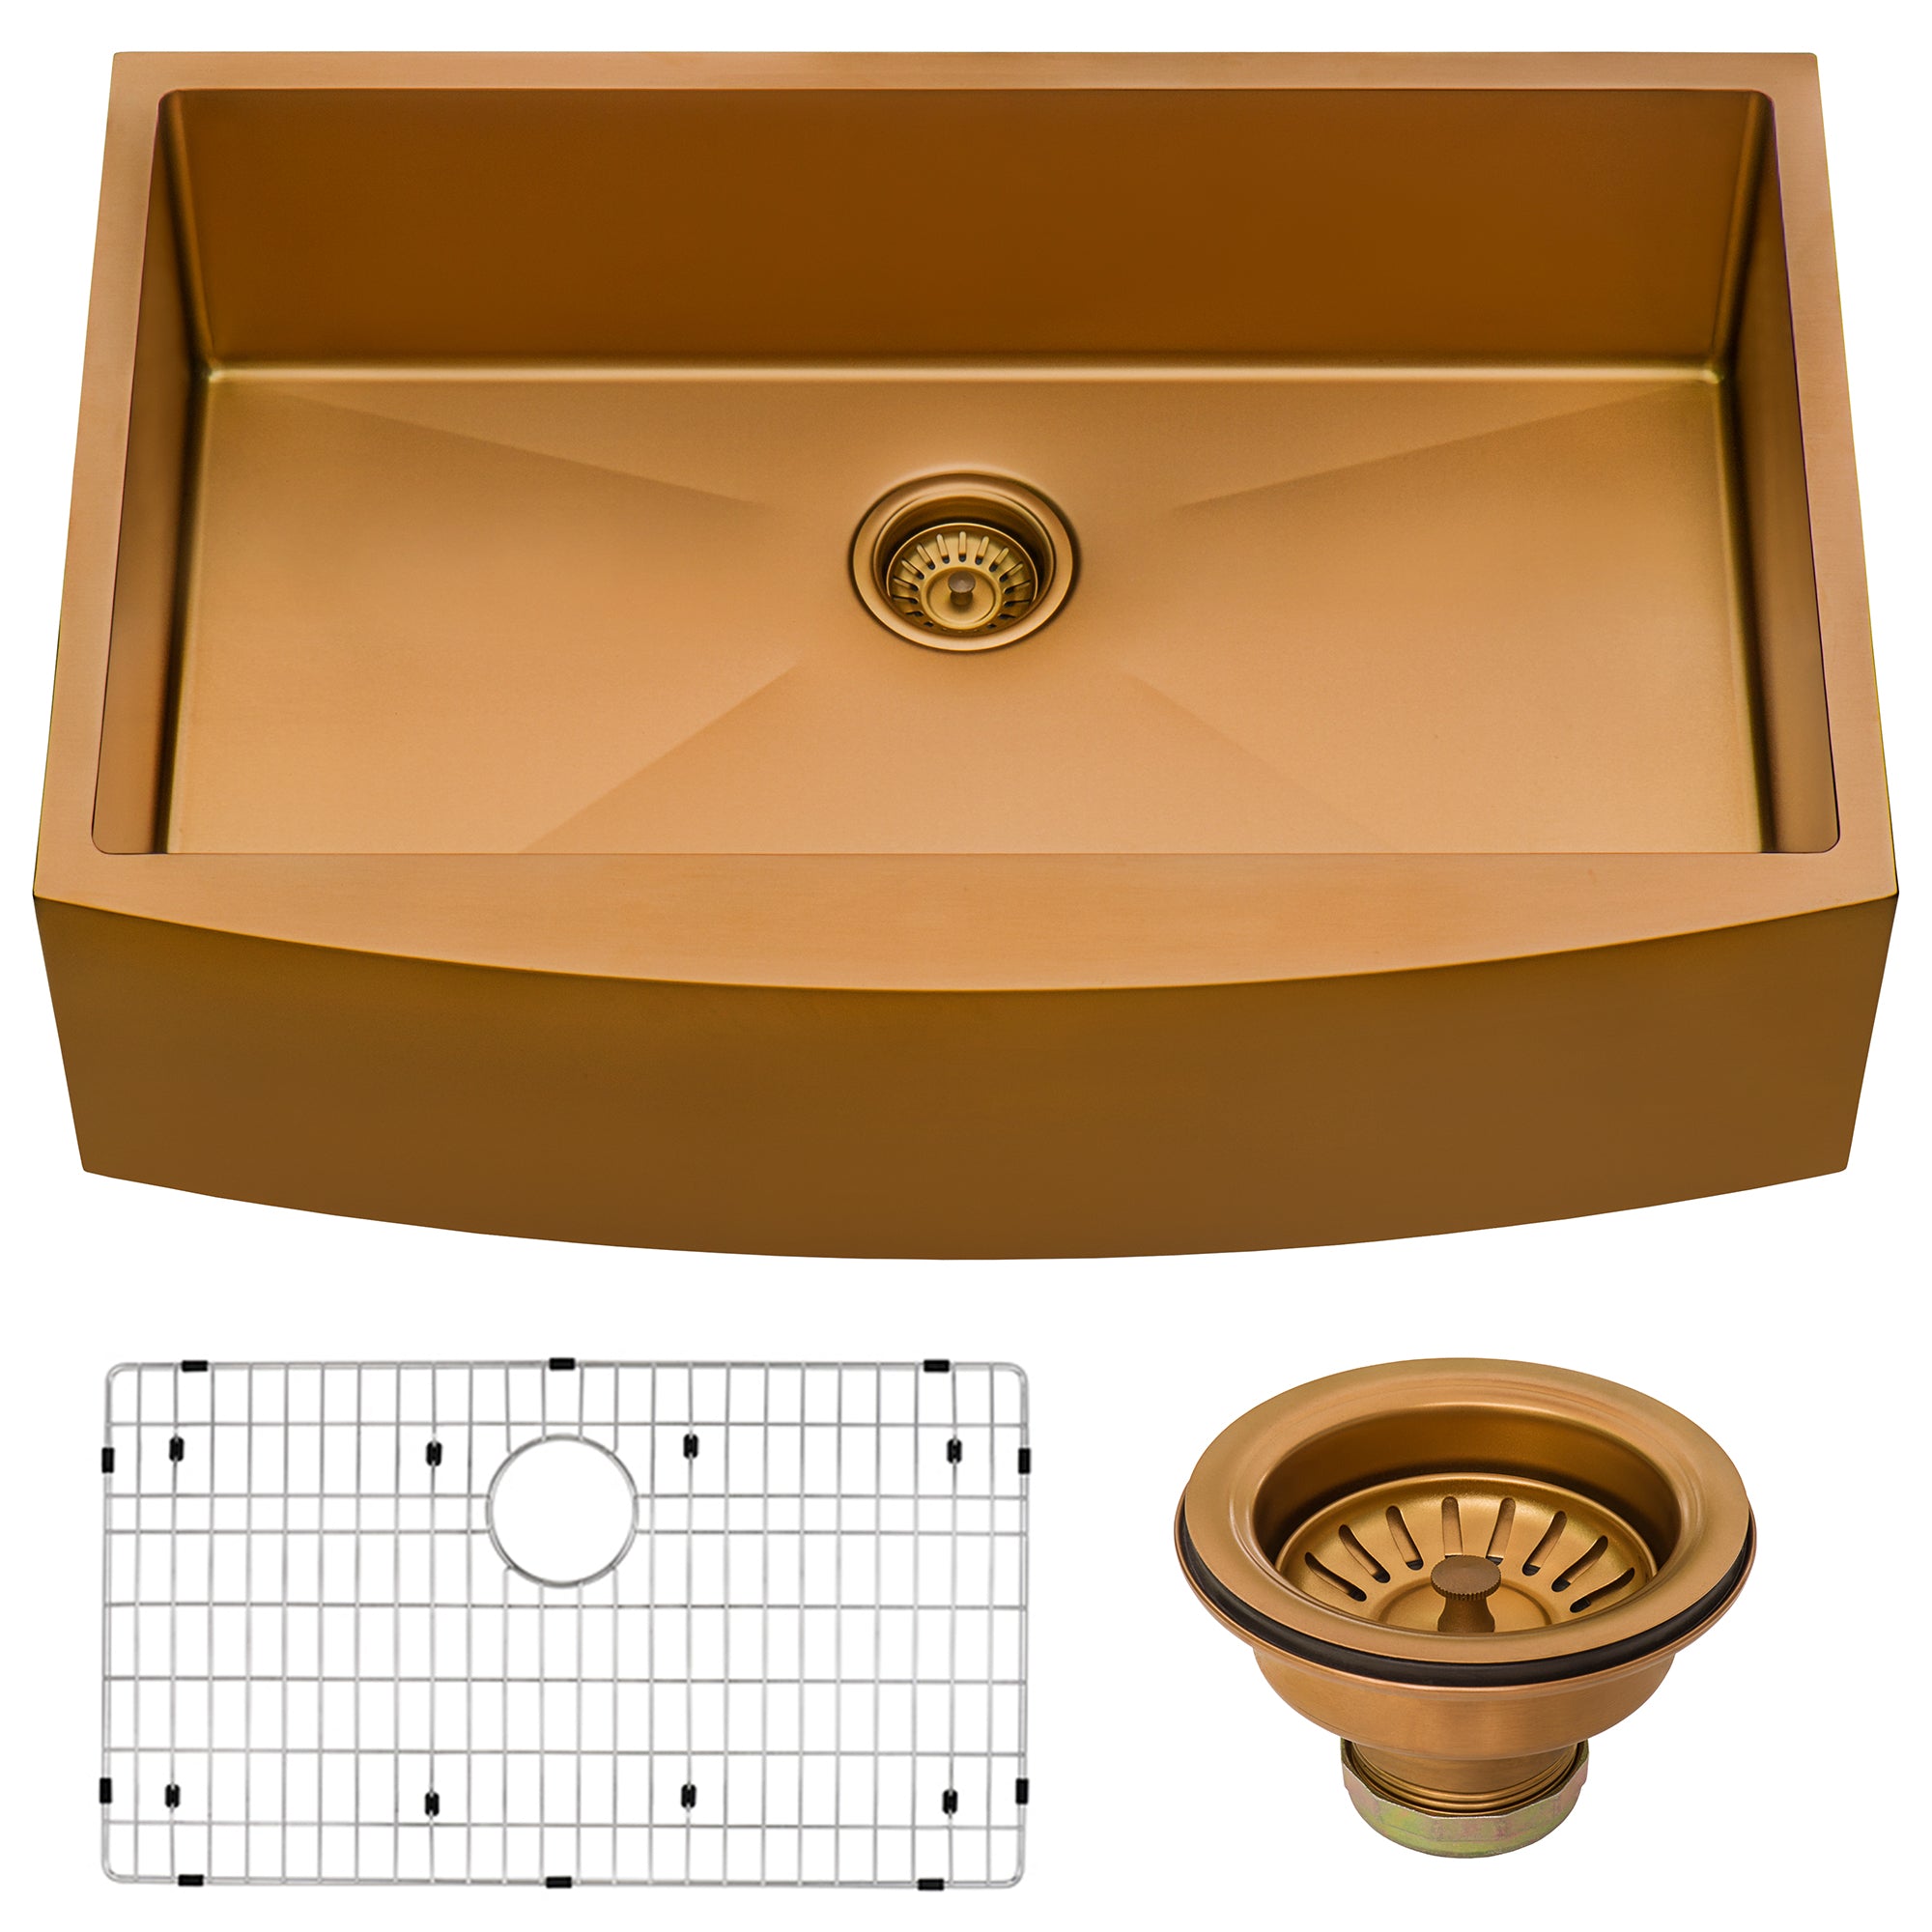 33-inch Apron-Front Farmhouse Kitchen Sink – Copper Tone Matte Bronze Stainless Steel Single Bowl